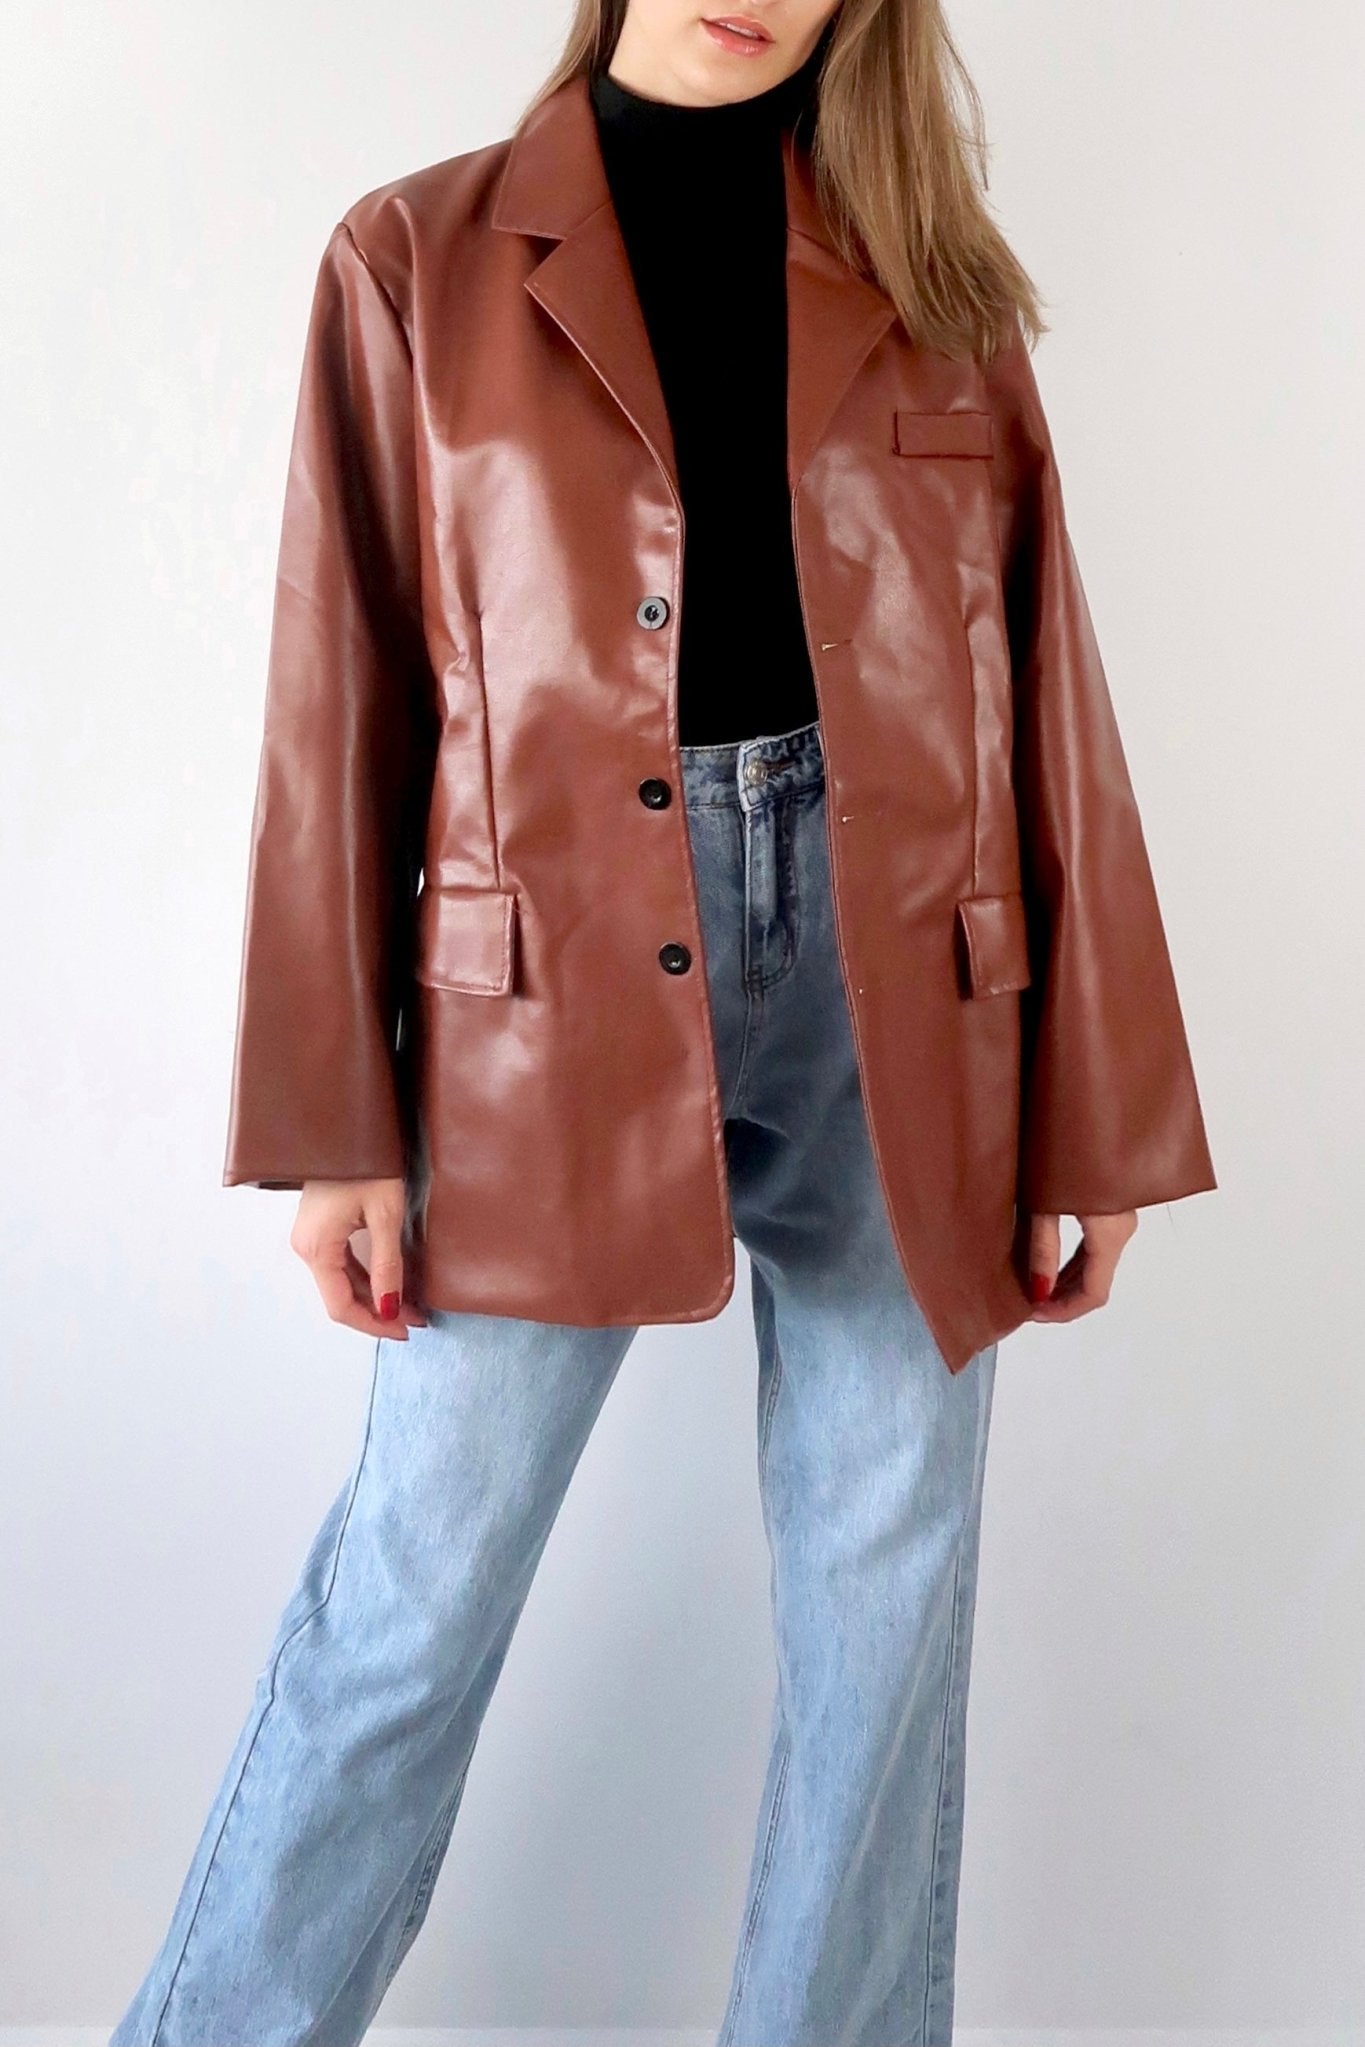 Retro vibe oversized leather blazer - SCG_COLLECTIONSOuterwear